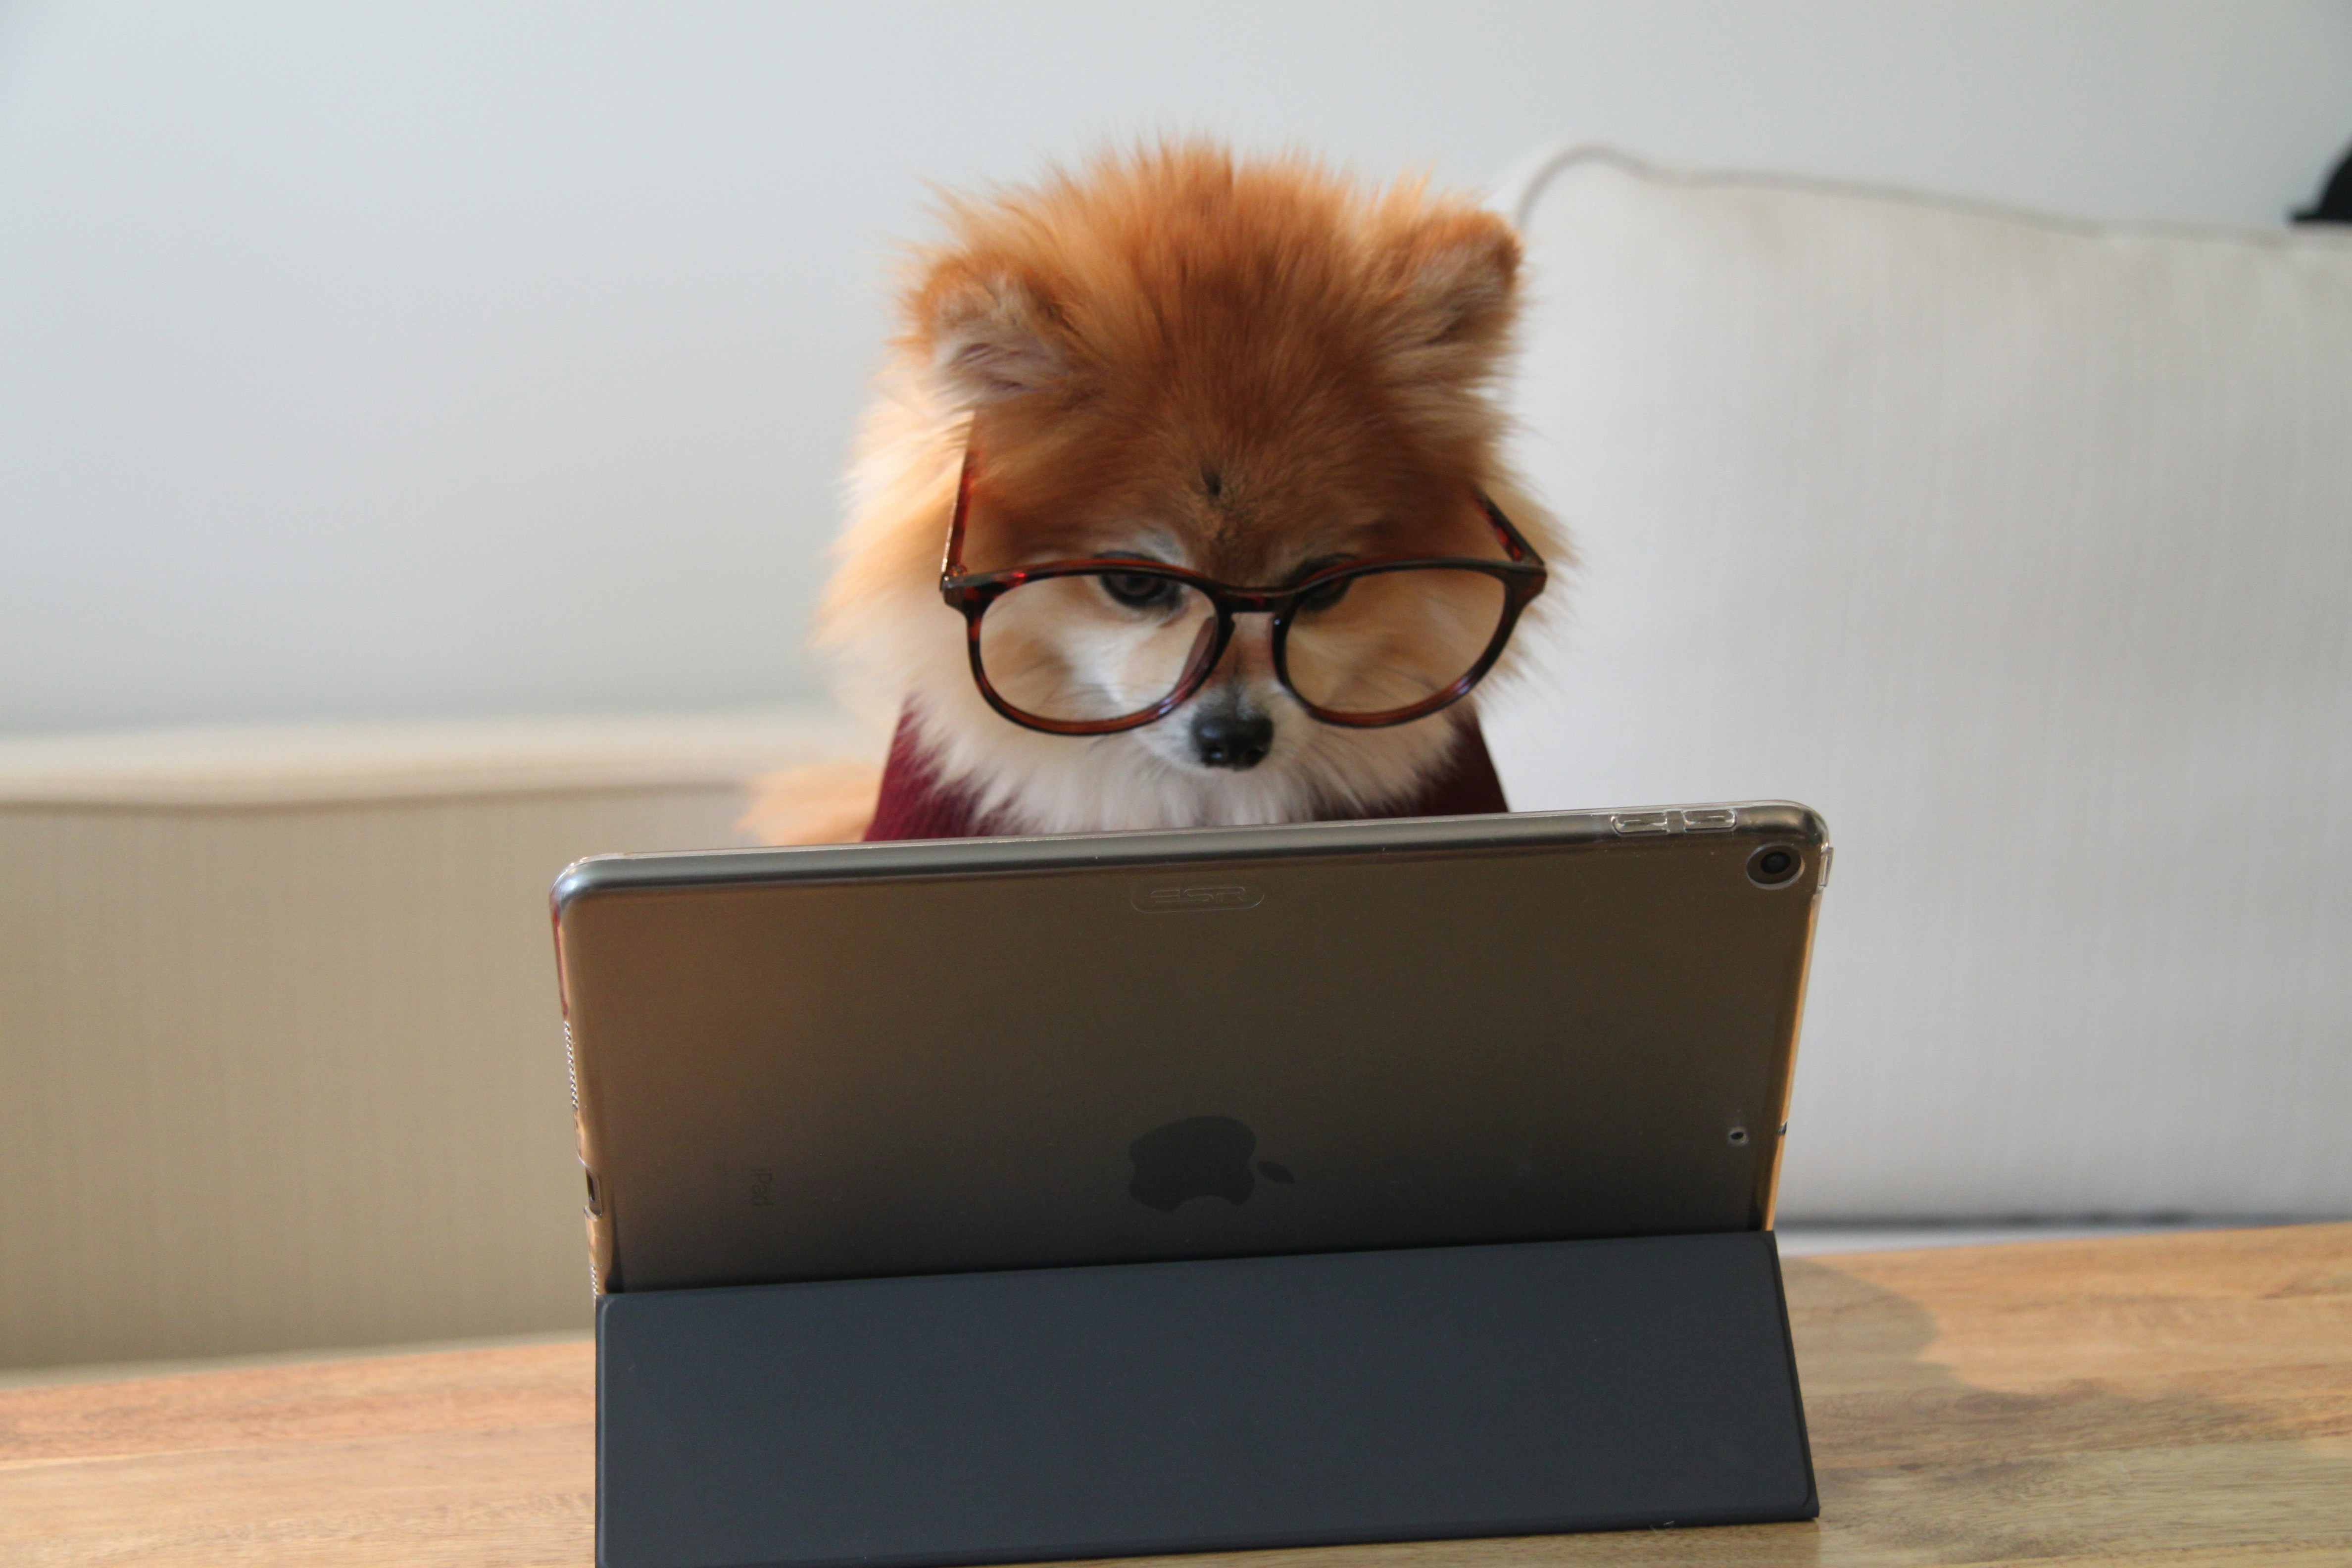 Dog wearing glasses watching Ipad